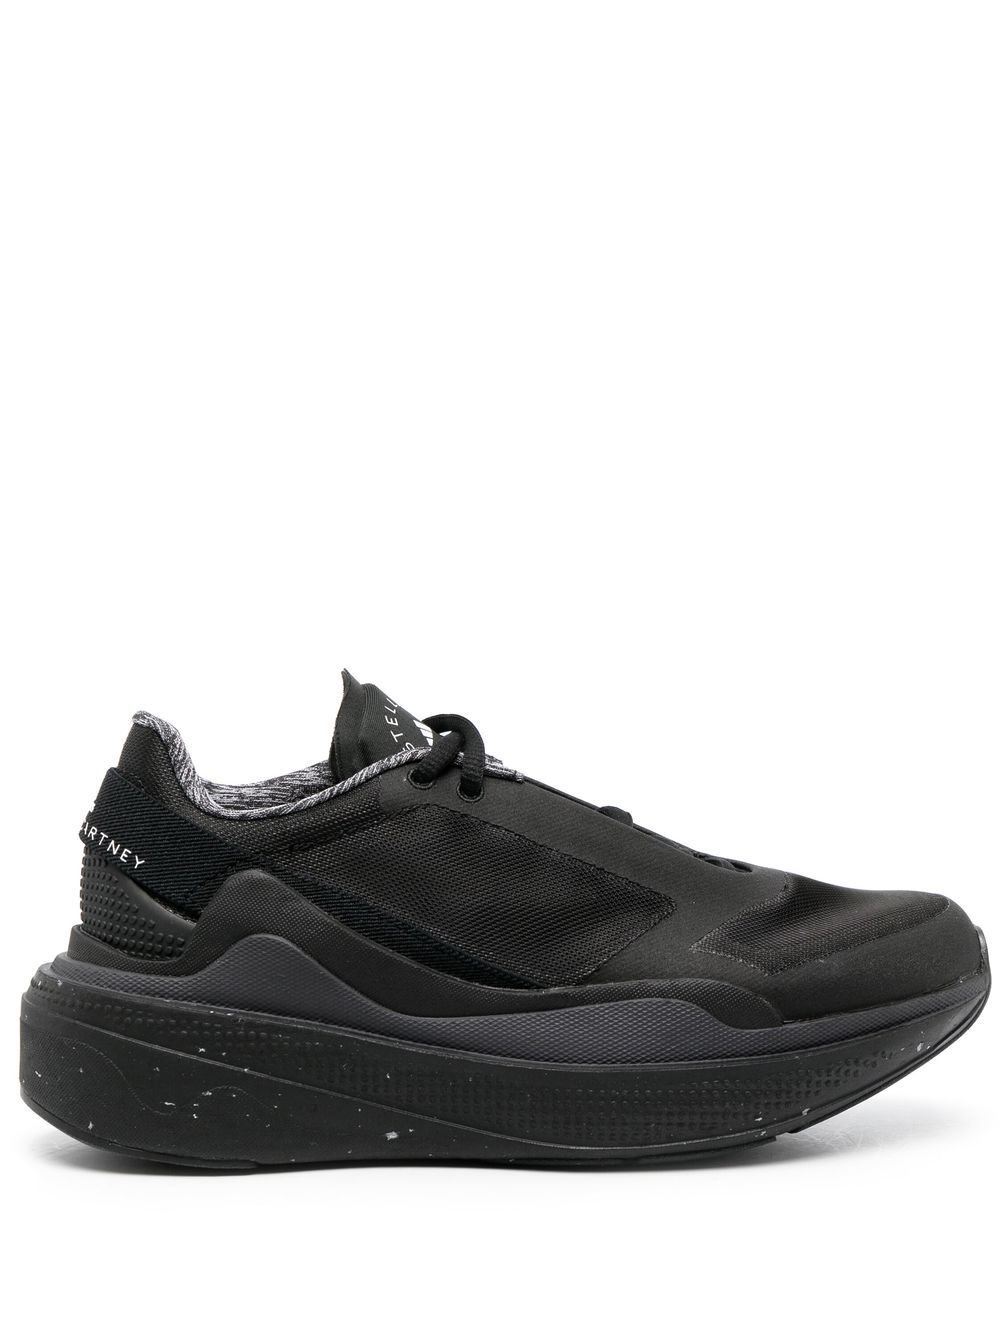 adidas by Stella McCartney Earthlight sneakers - Black